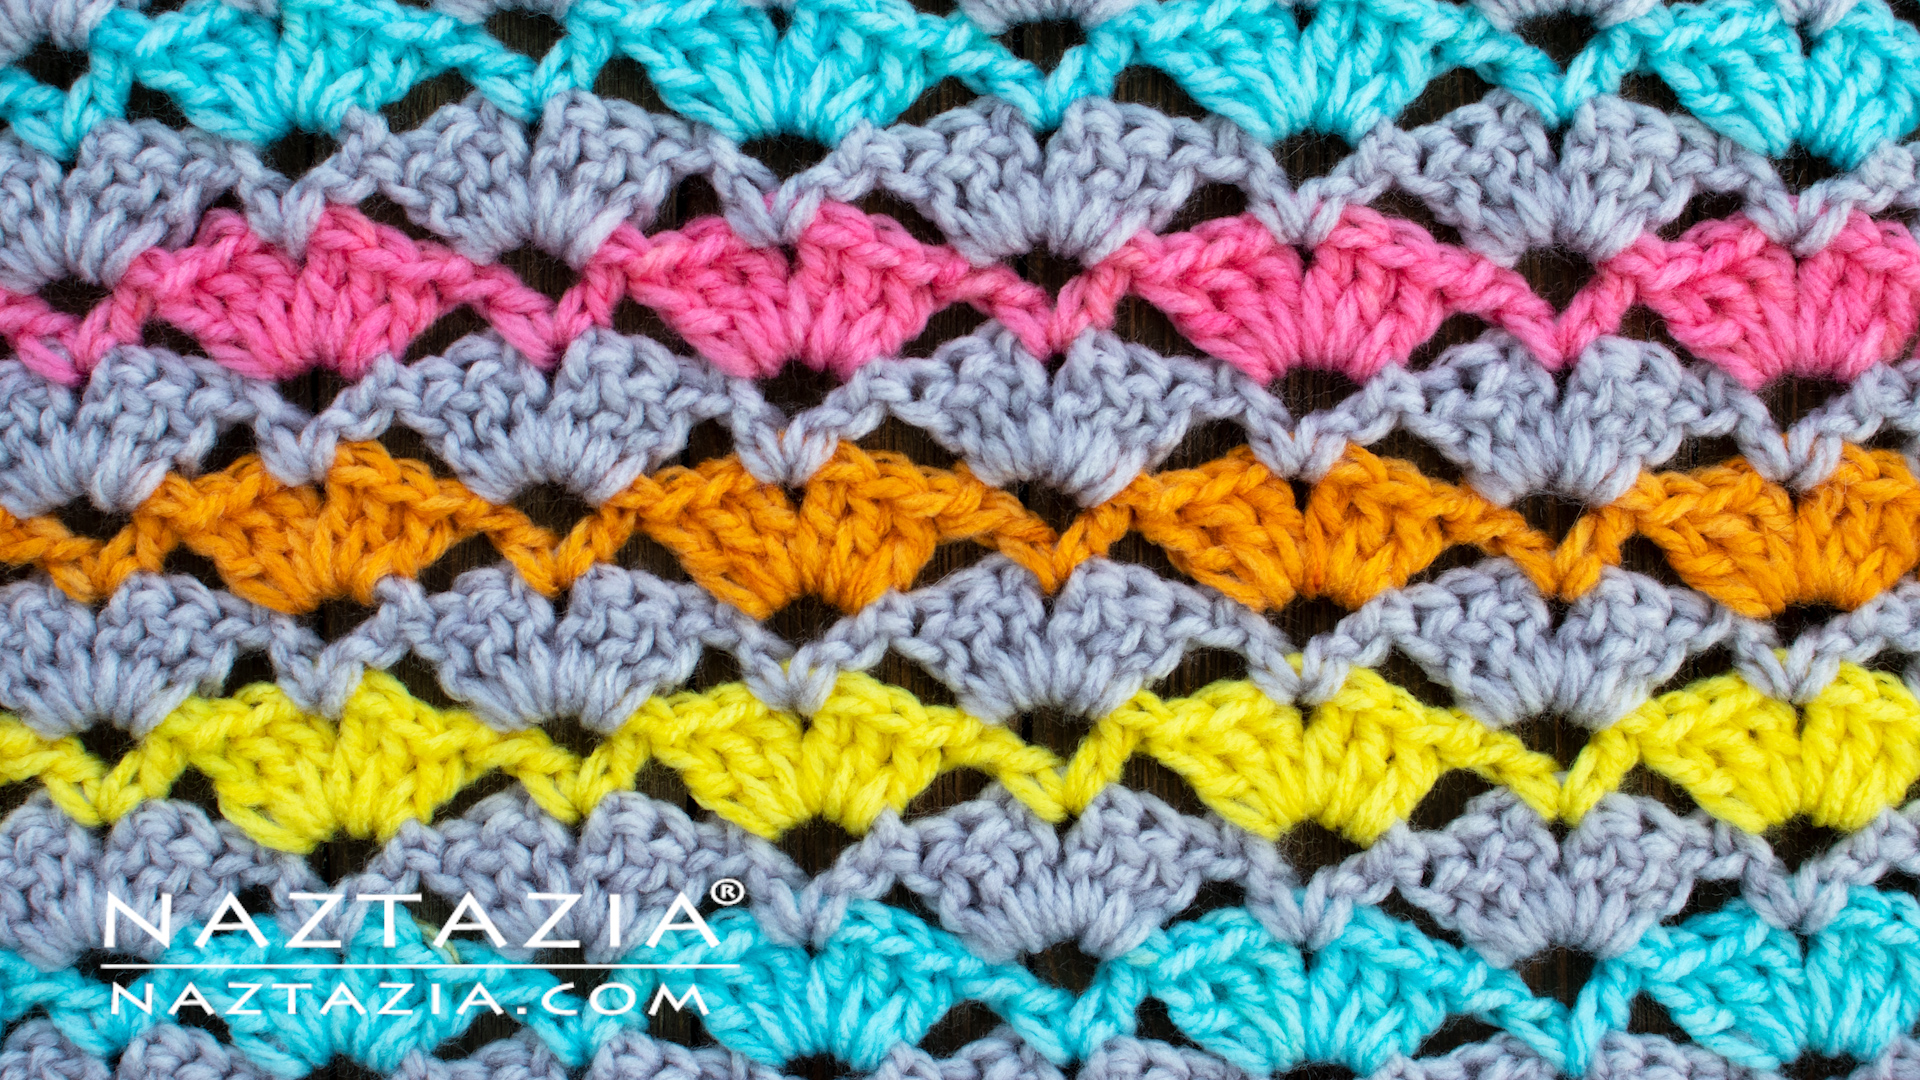 How to Crochet the Open Shell Stitch - Naztazia